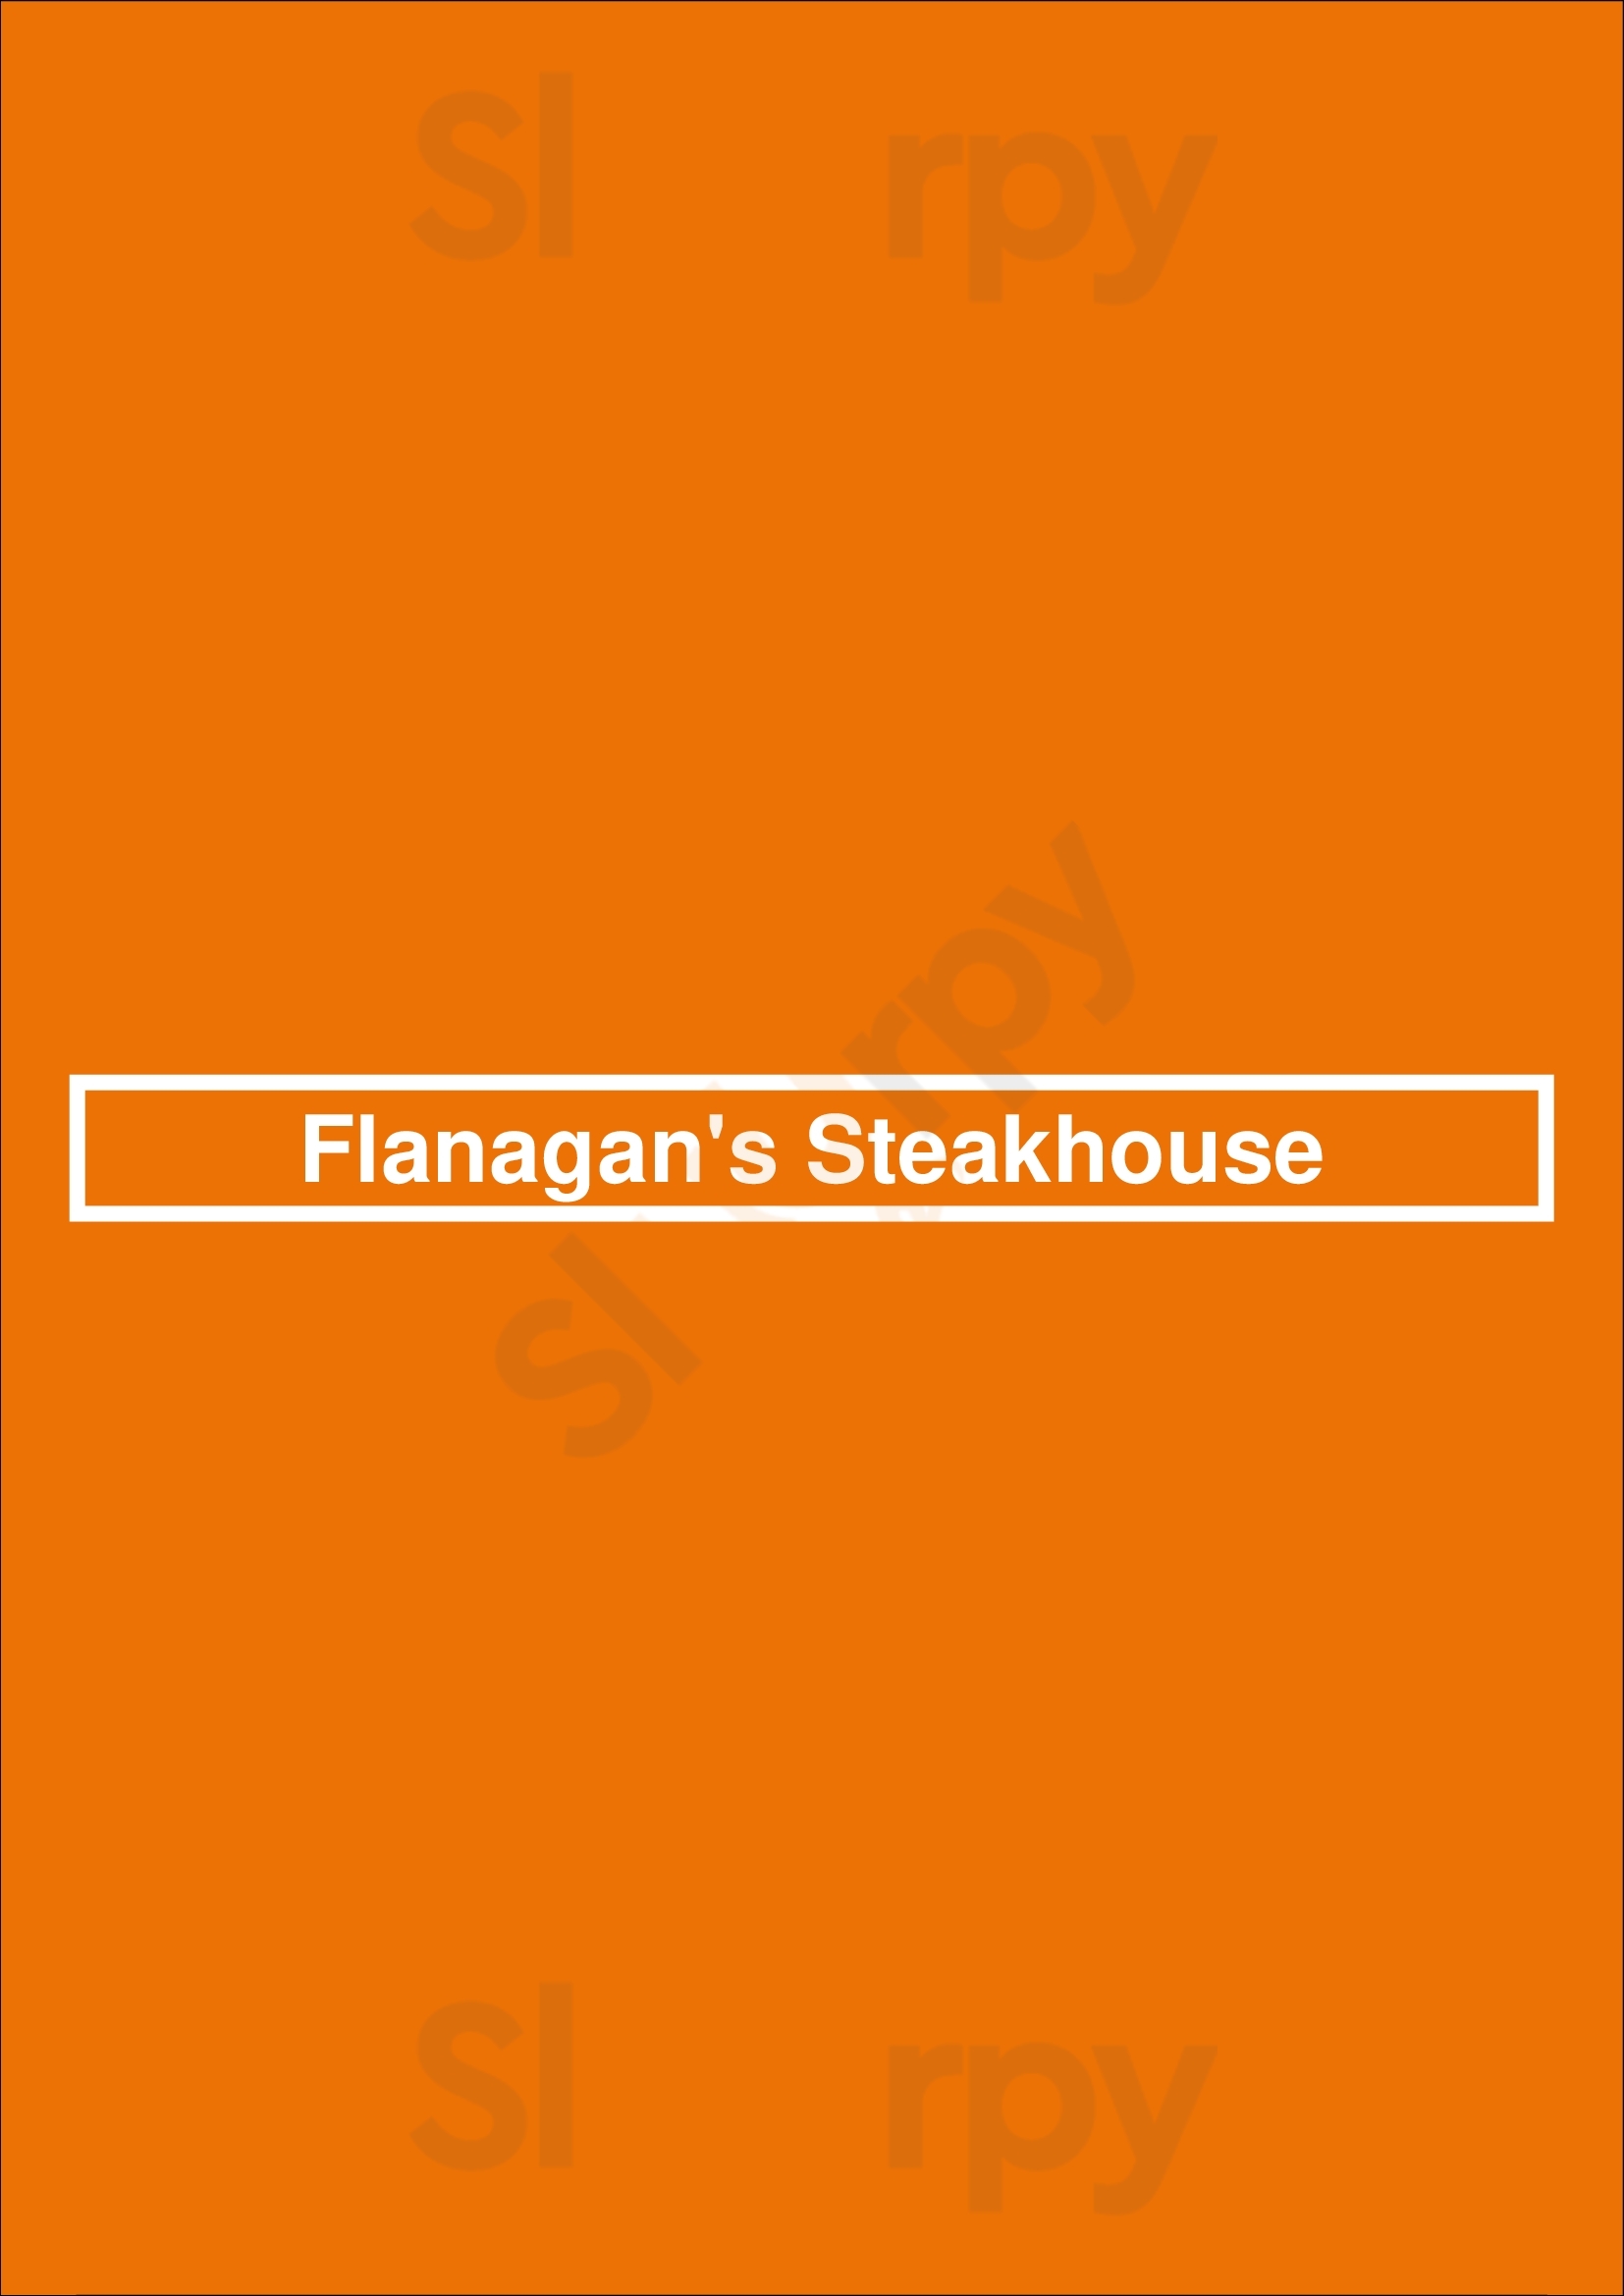 Flanagan's Steakhouse Saskatoon Menu - 1